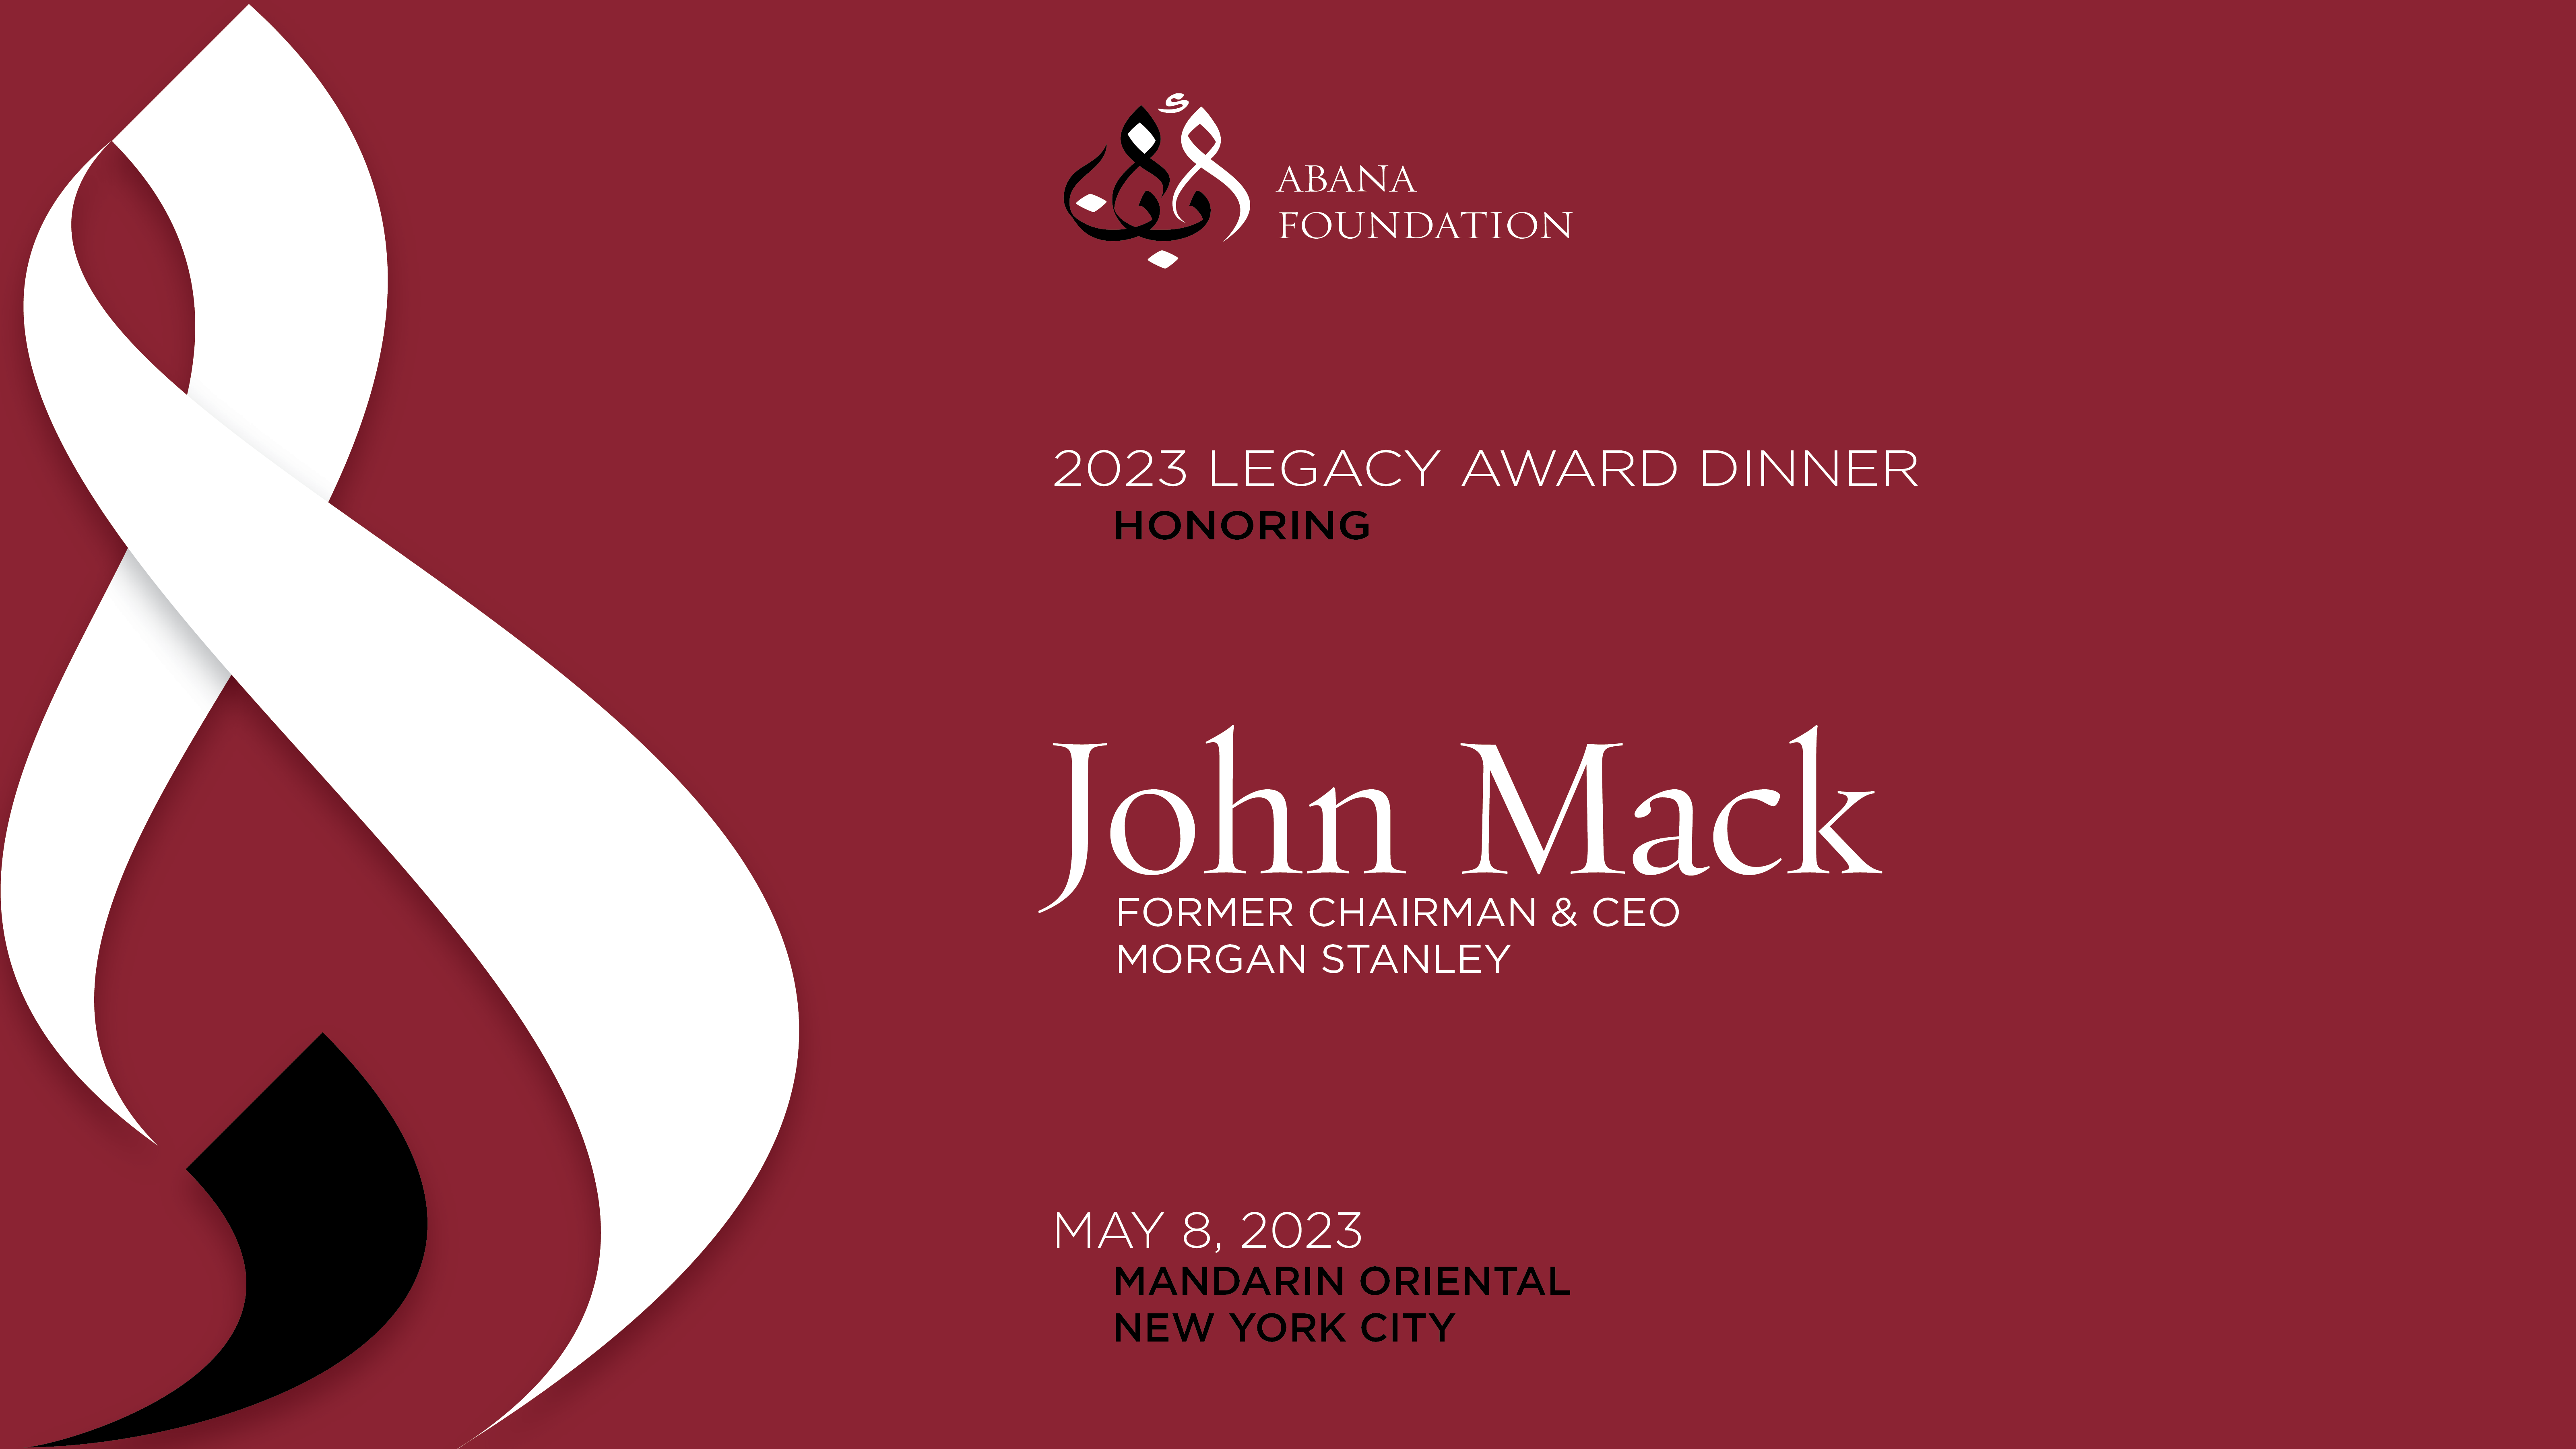 2023 Legacy Award Dinner honoring John Mack, former Chairman & CEO, Morgan Stanley